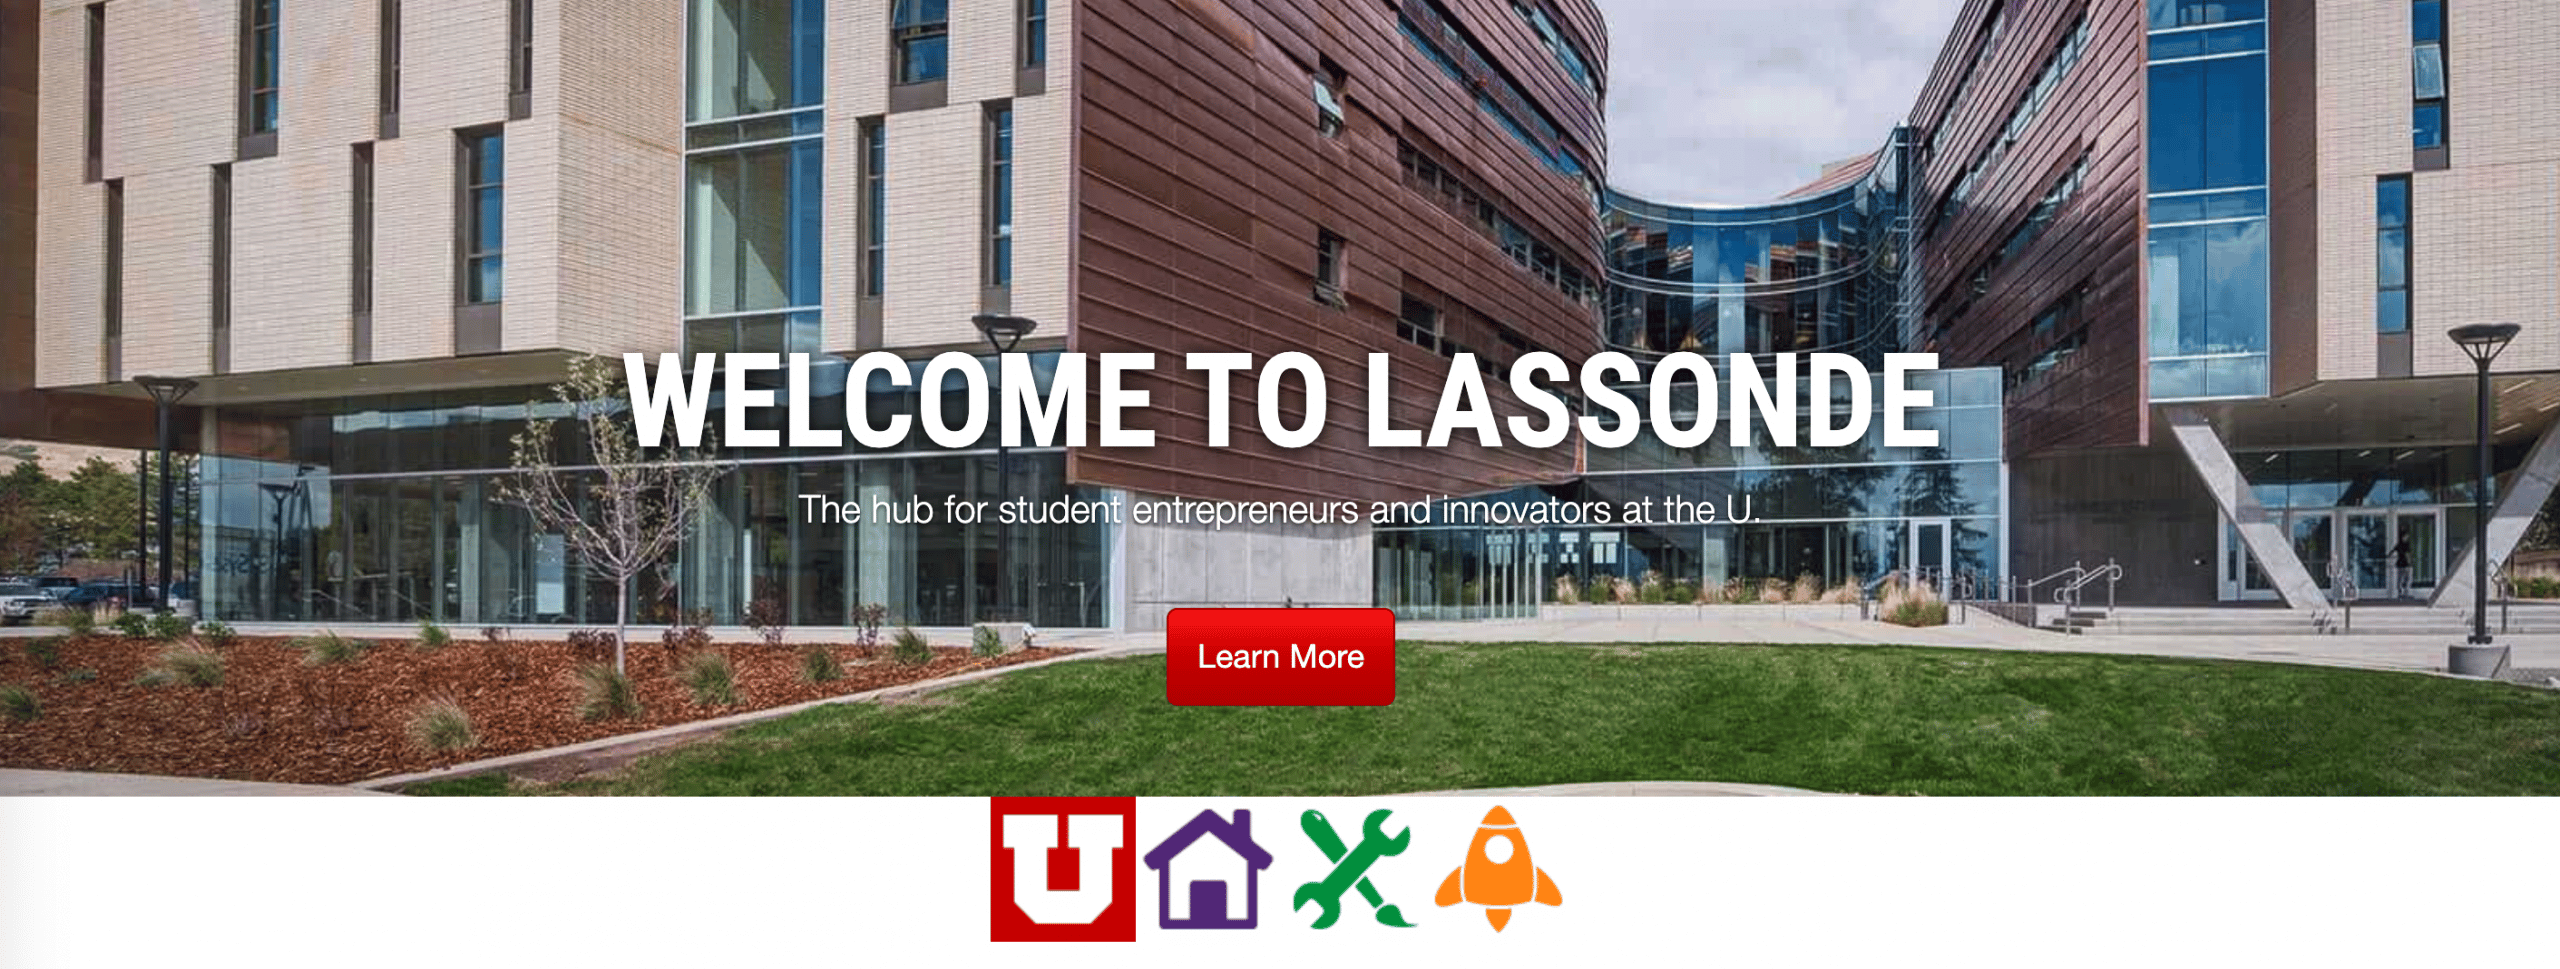 Paubox is Hiring in Utah - Lassonde Entrepreneurship Institute